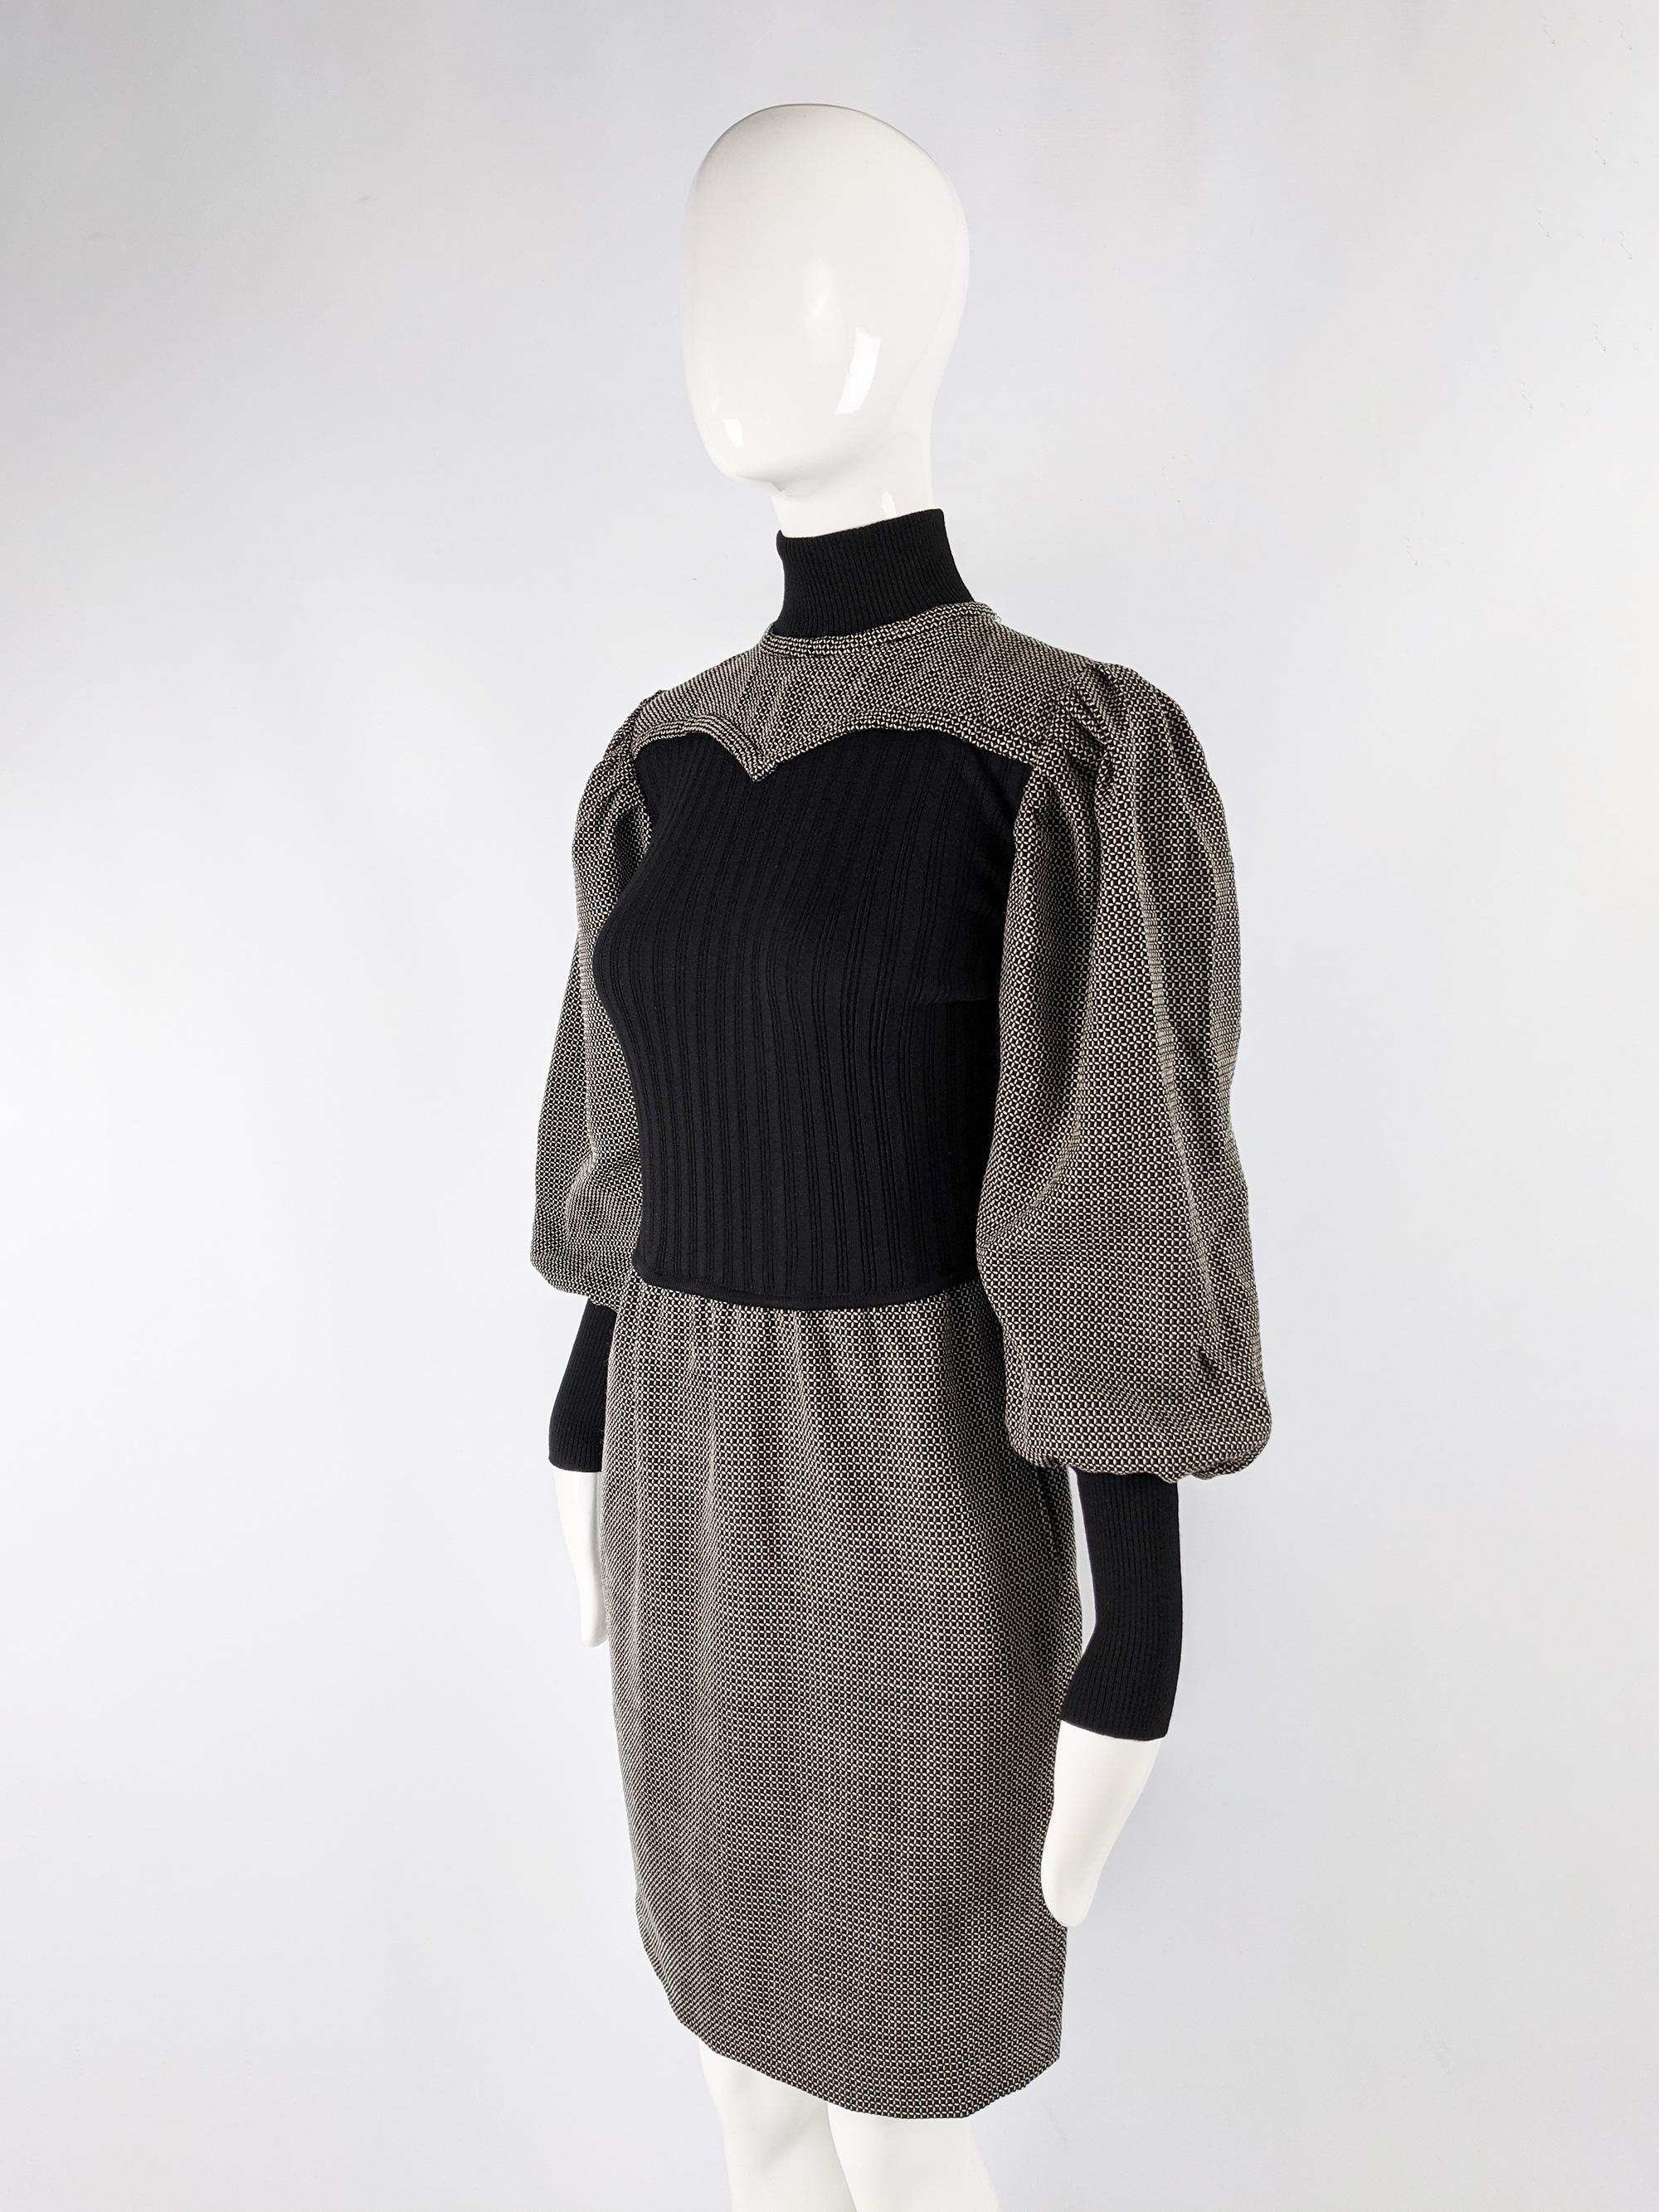 Emanuel Ungaro Black & White Puffed Sleeve Dress, 1980s For Sale 1